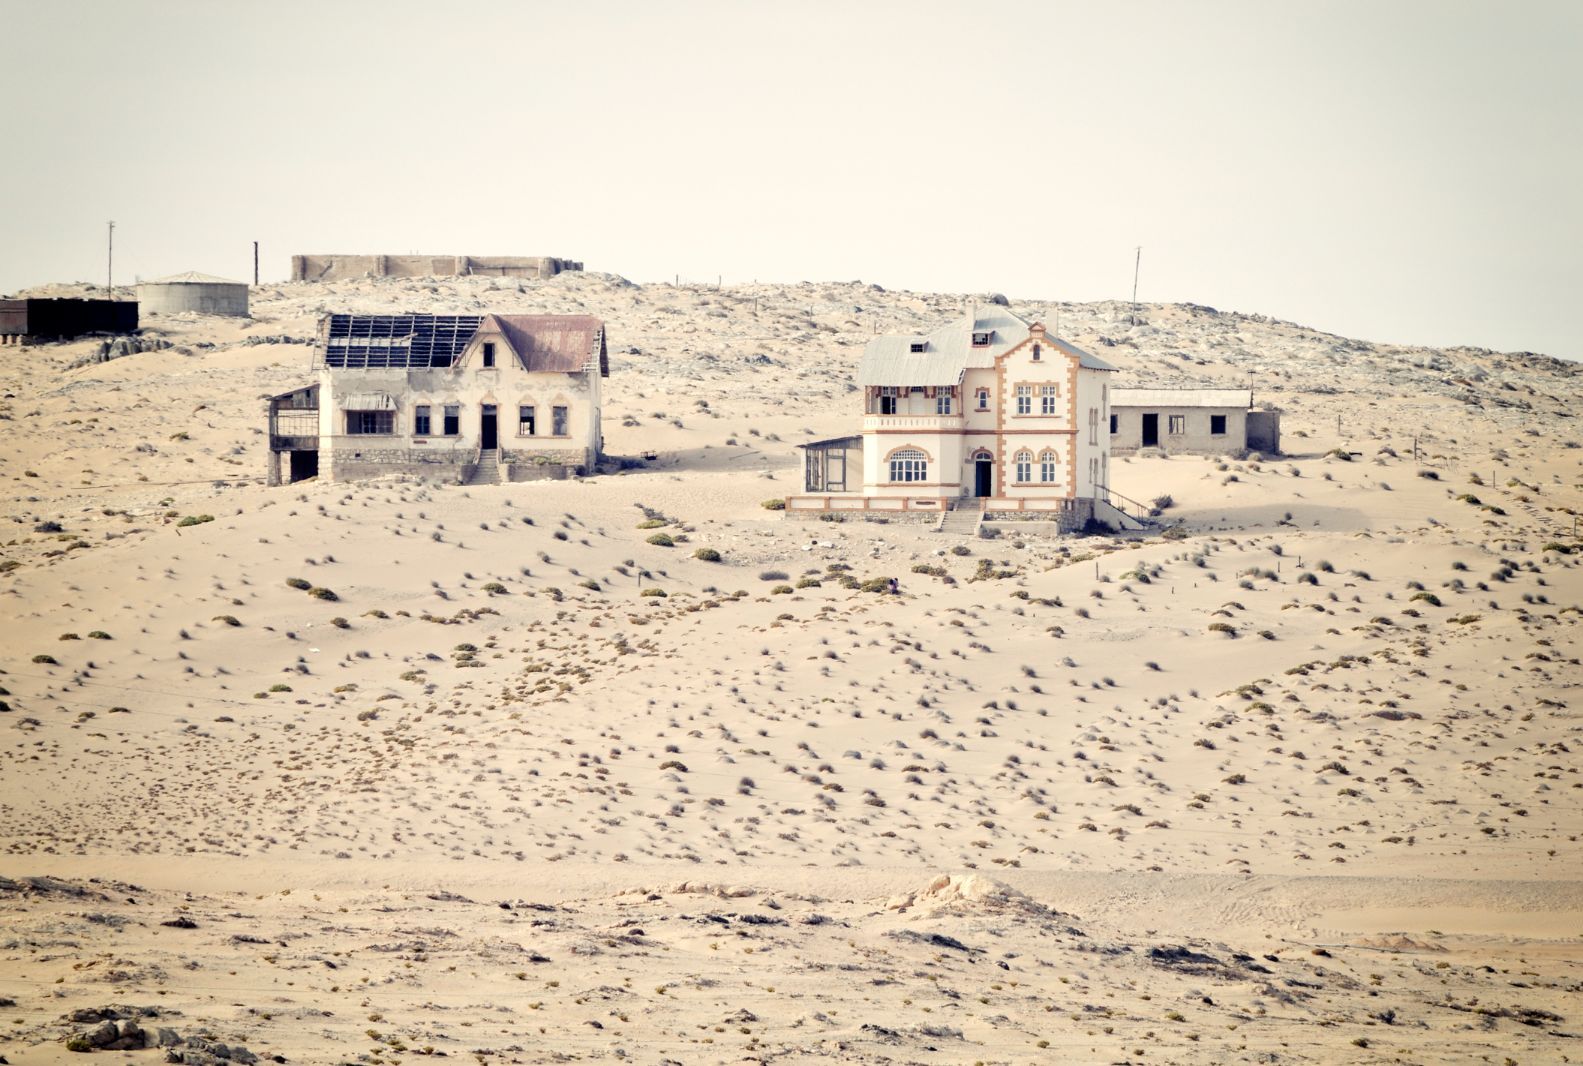  The History of Kolmanskop - Namibia’s Abandoned Diamond Town houses